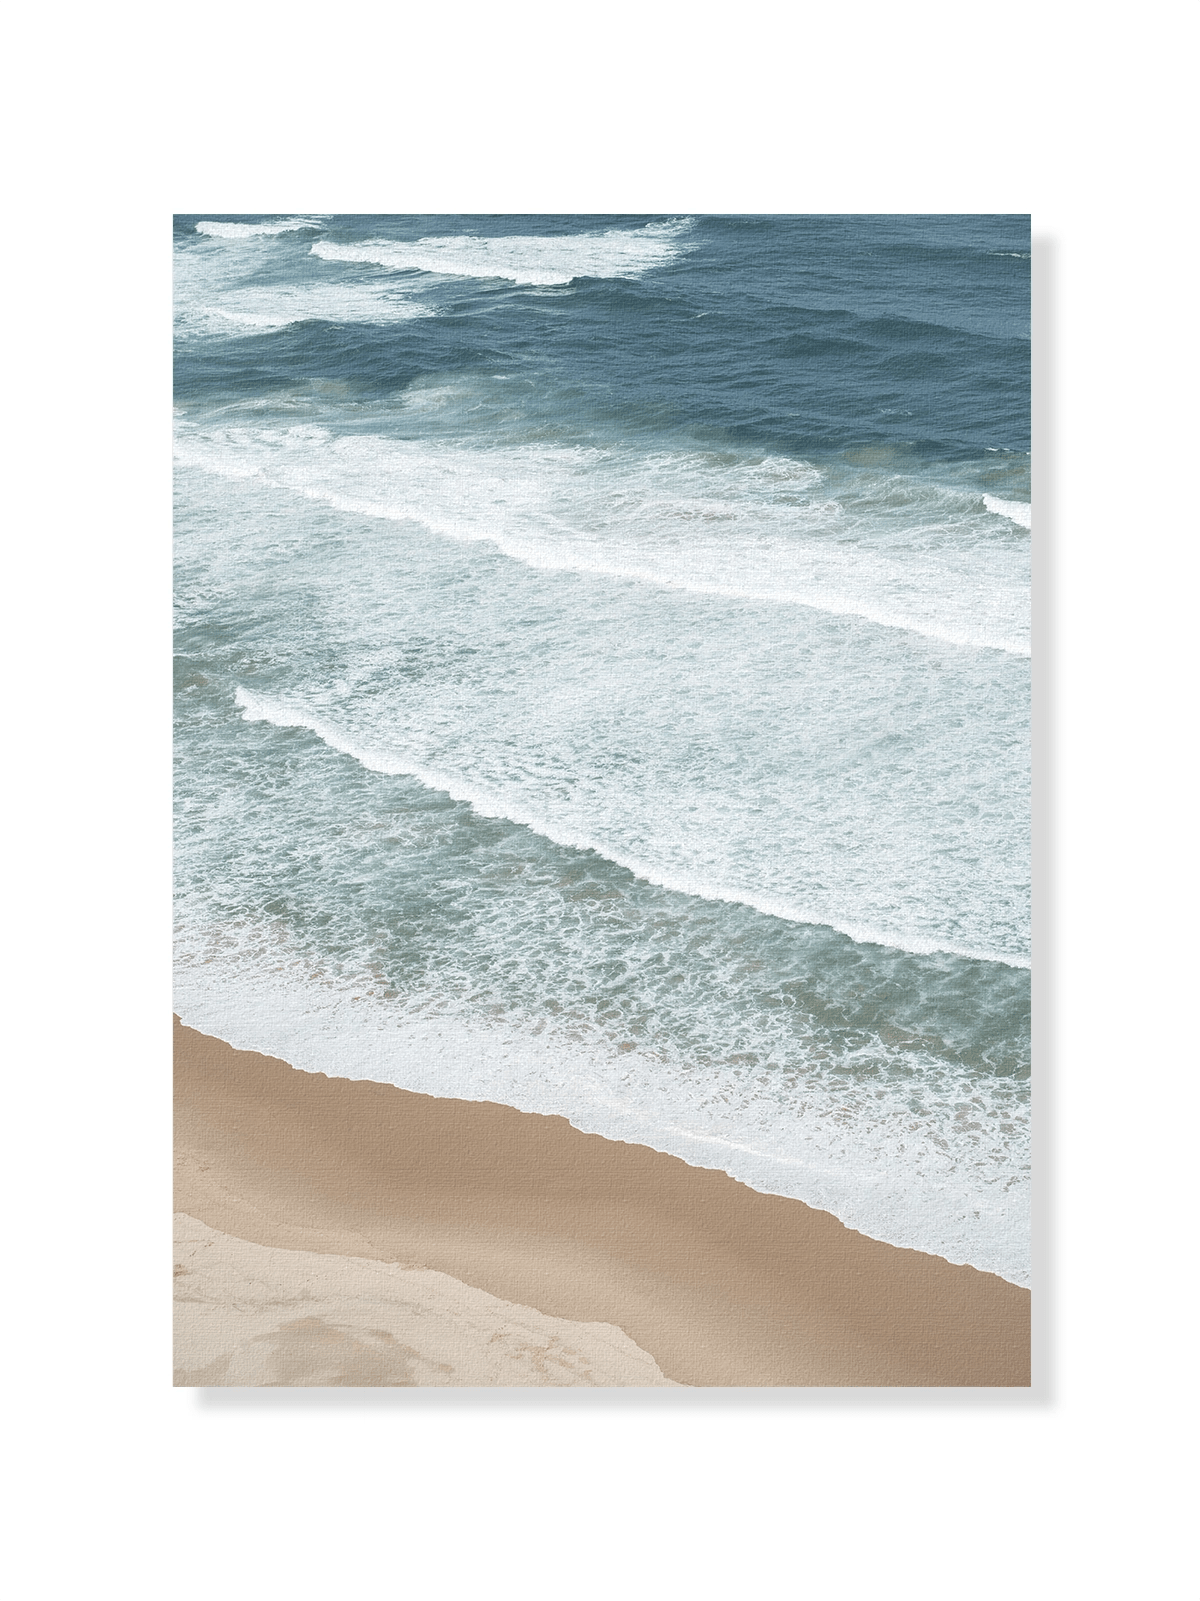 Atlantic Waves - Lámina de Henrike Schenk - Decora tu casa en Nomadart